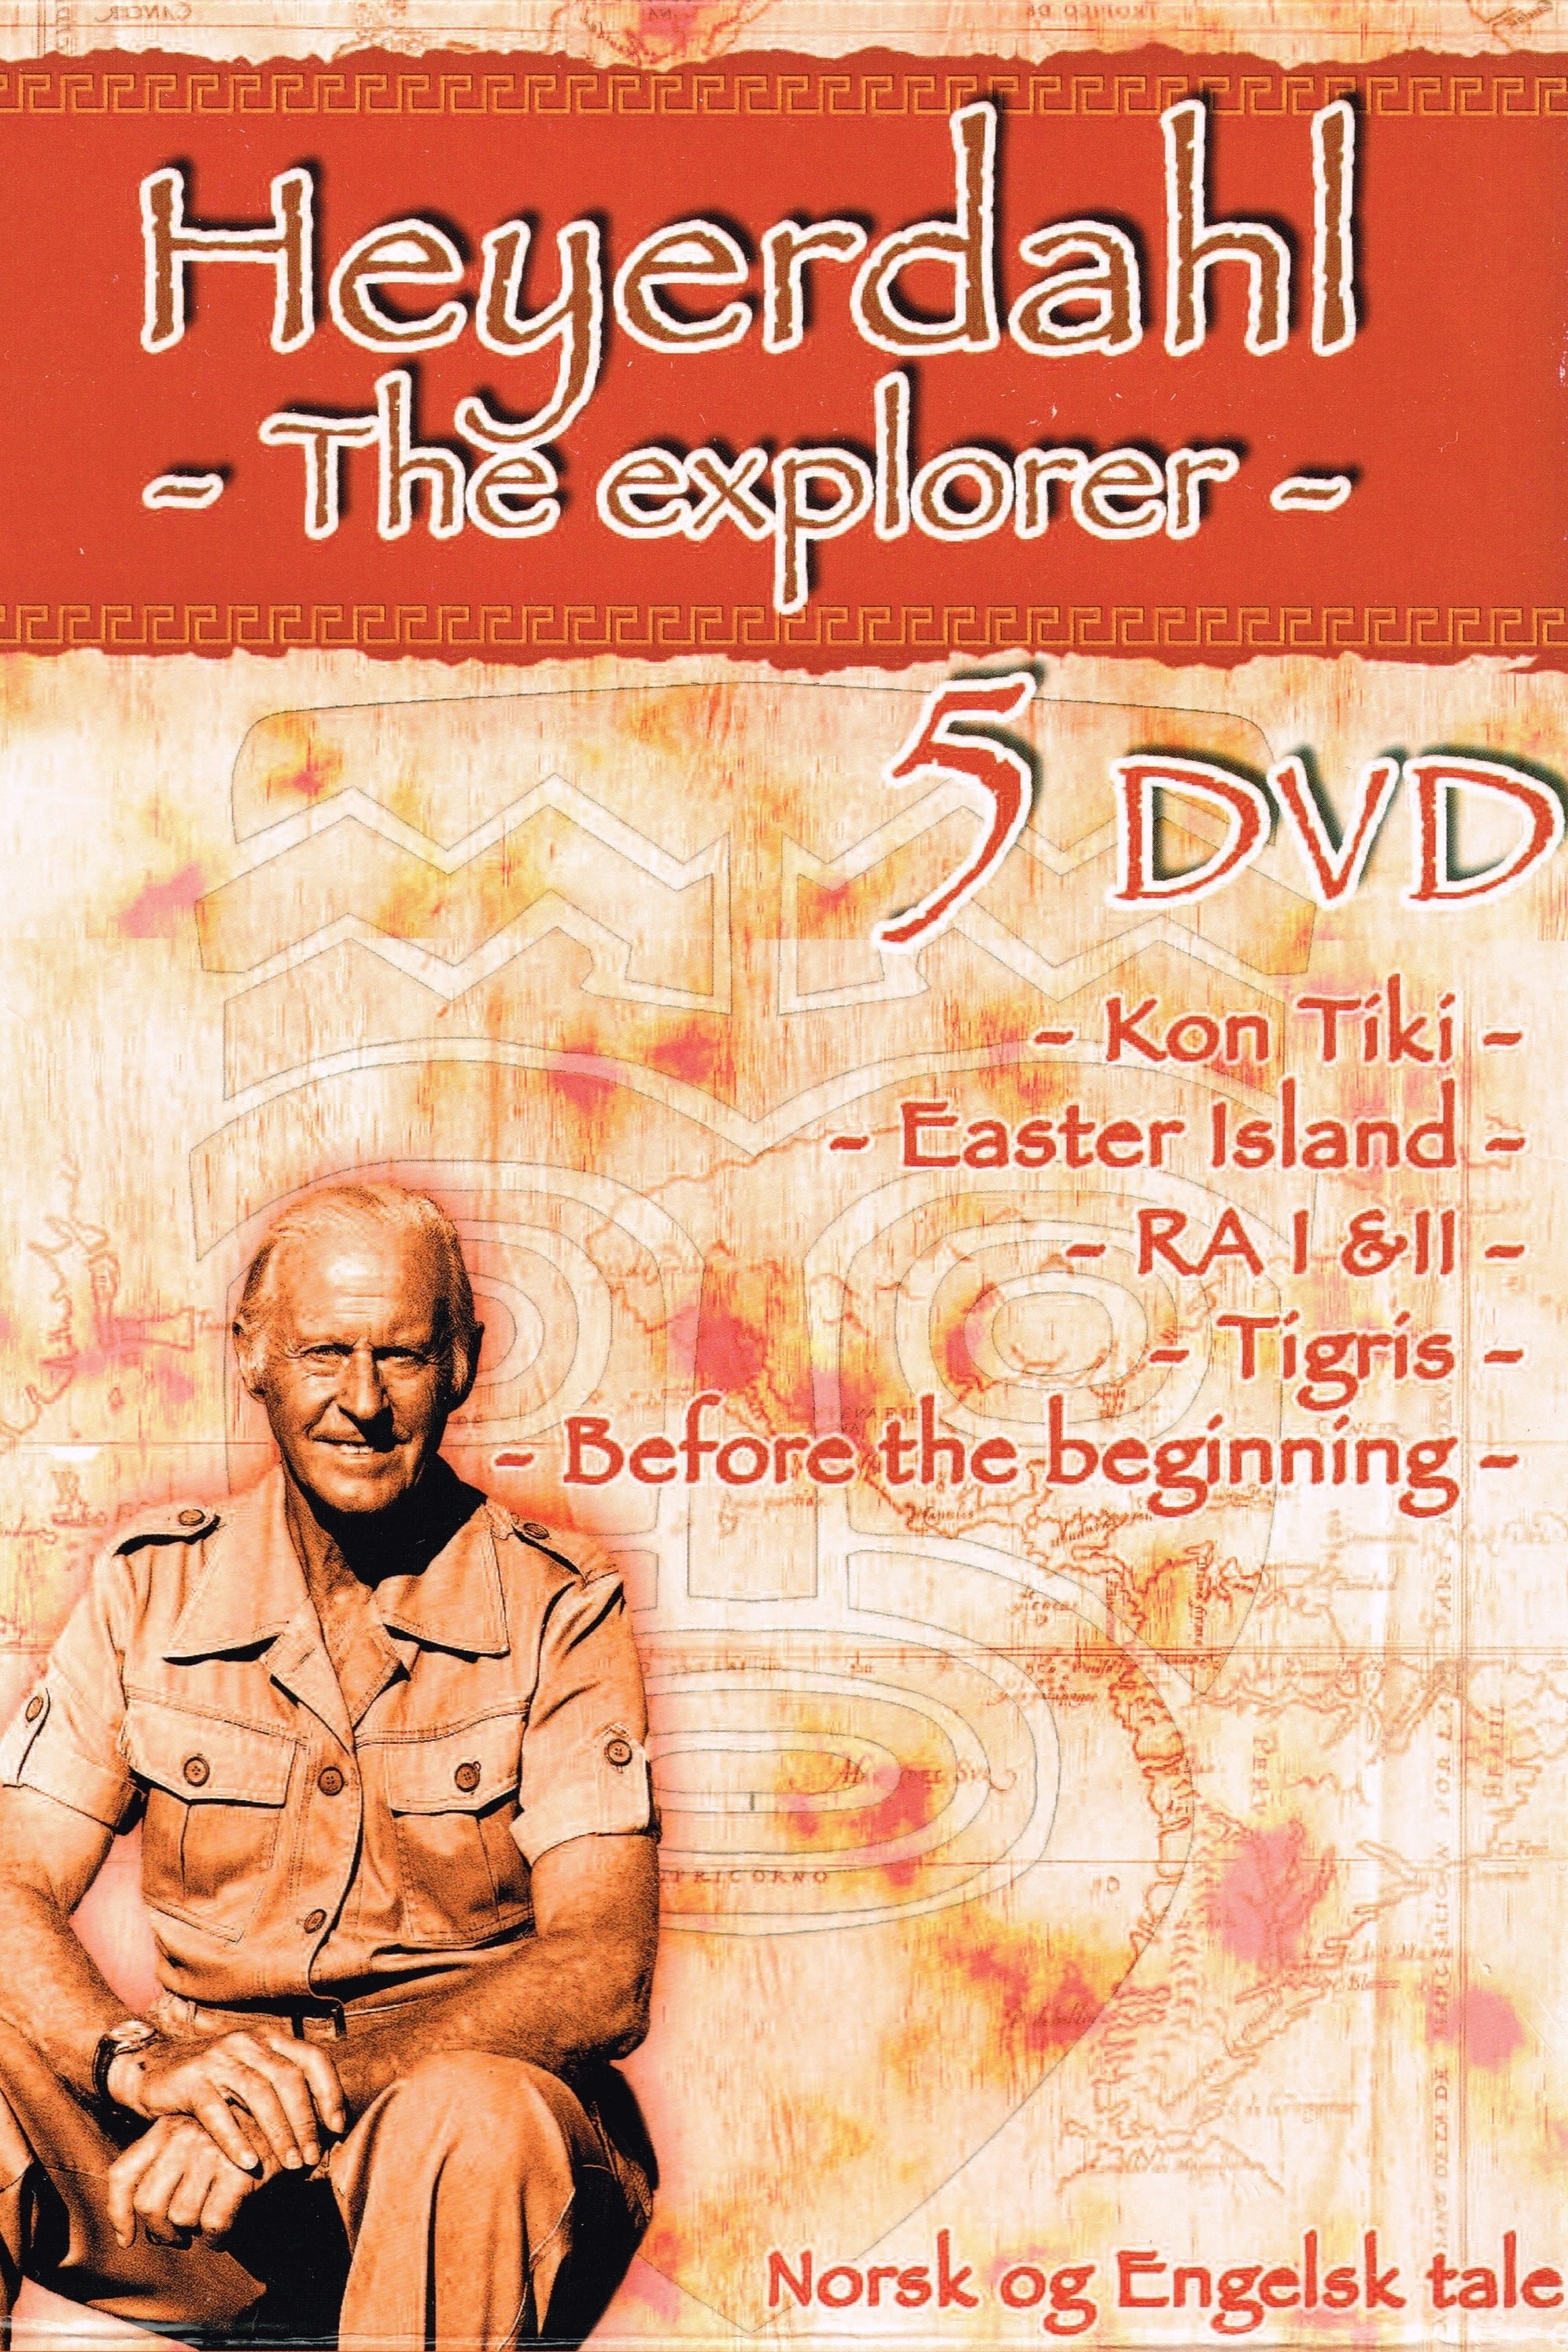 Thor Heyerdahl - The Kon-Tiki Man